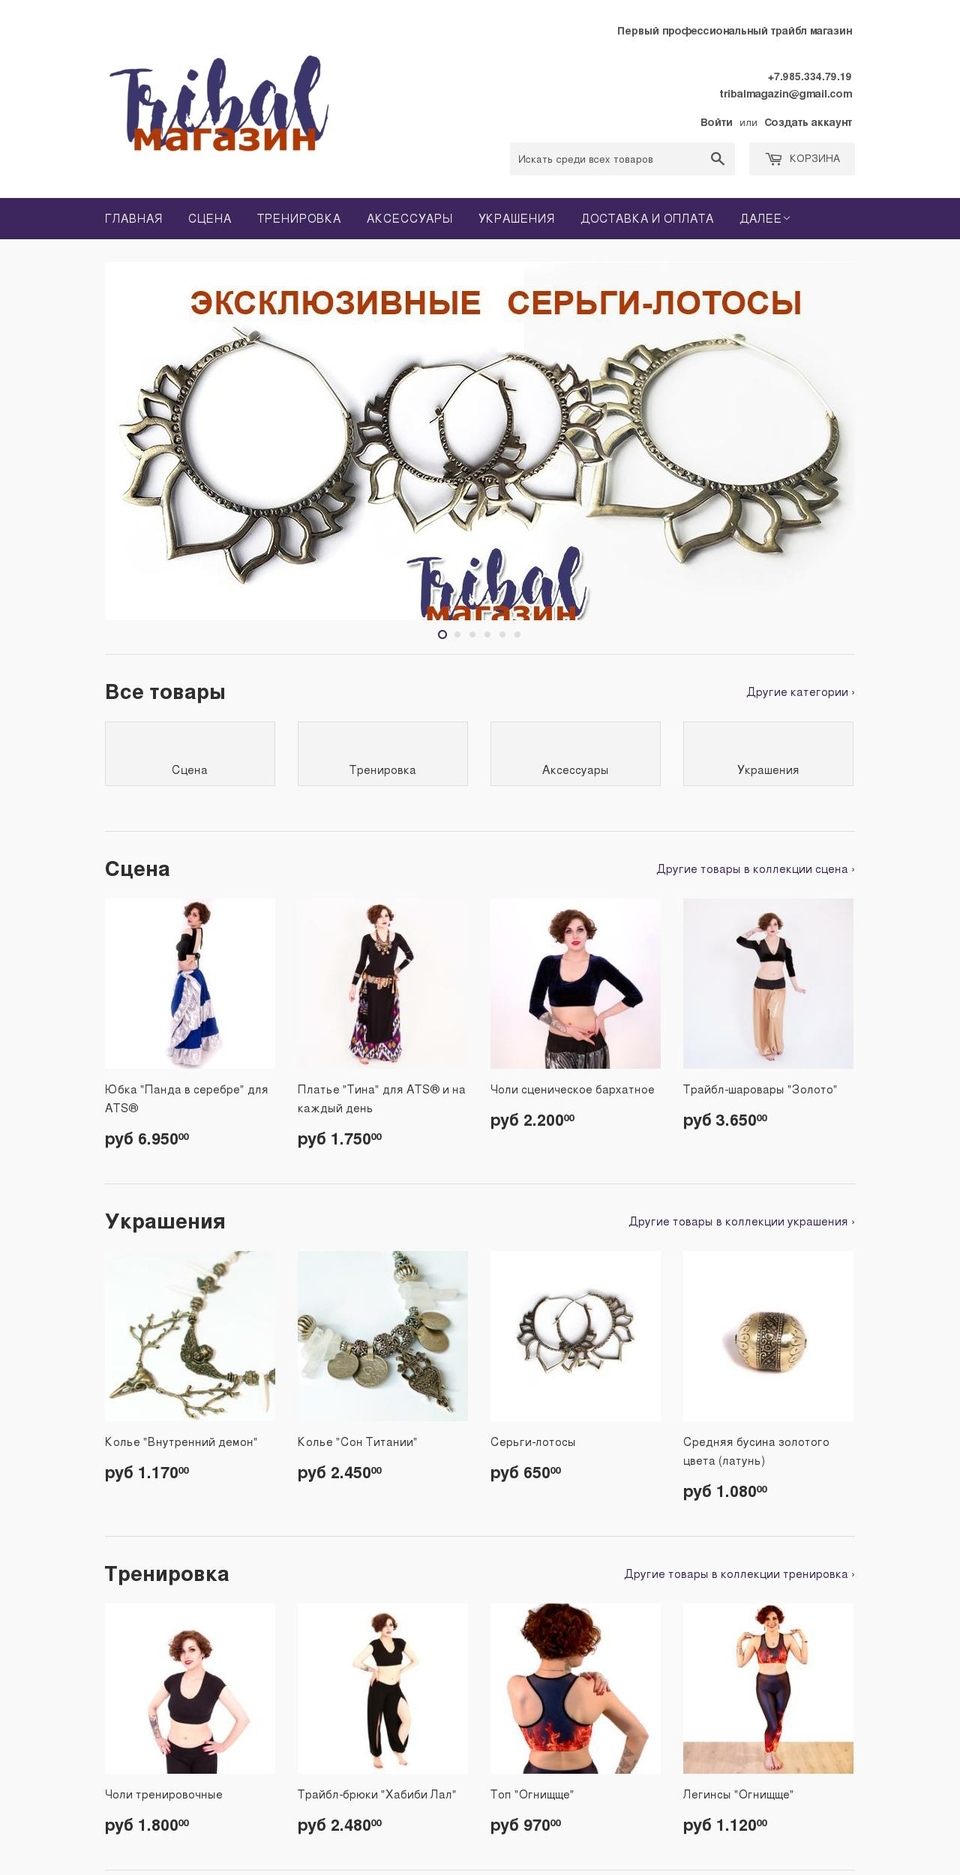 tribalmagazin.ru shopify website screenshot